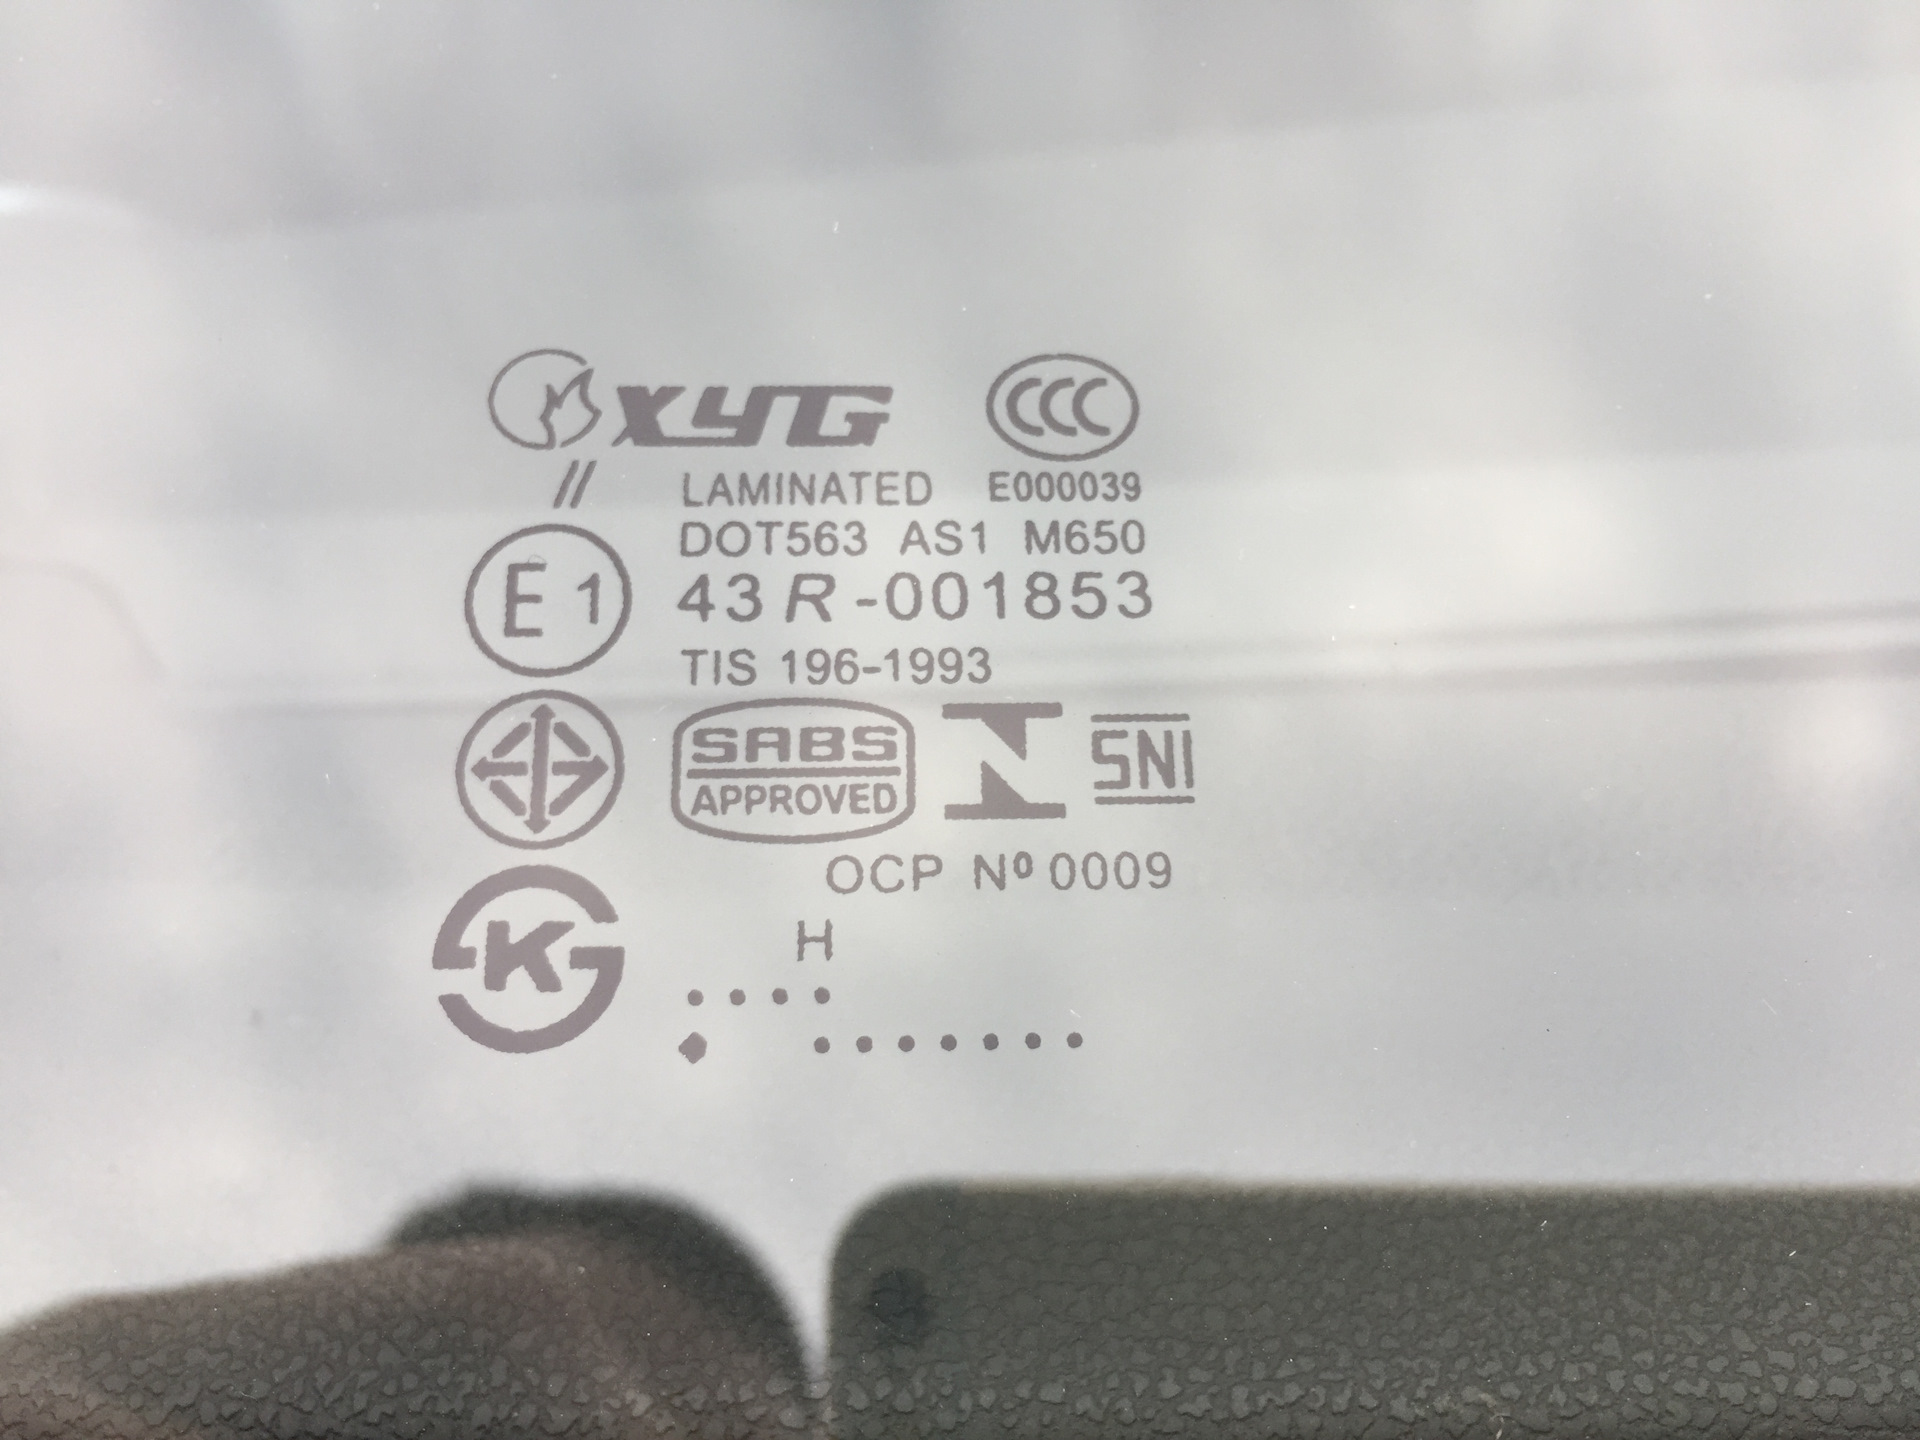 Автостекла xyg. Лобовое стекло XYG Laminated Safety Glass Dot 563 as 1m 650. 43r 001853 лобовое стекло. 43r-001853 XYG Dot 563 as1 m650. Стекло XYG Dot 563 as-1m-650 43r-001853.